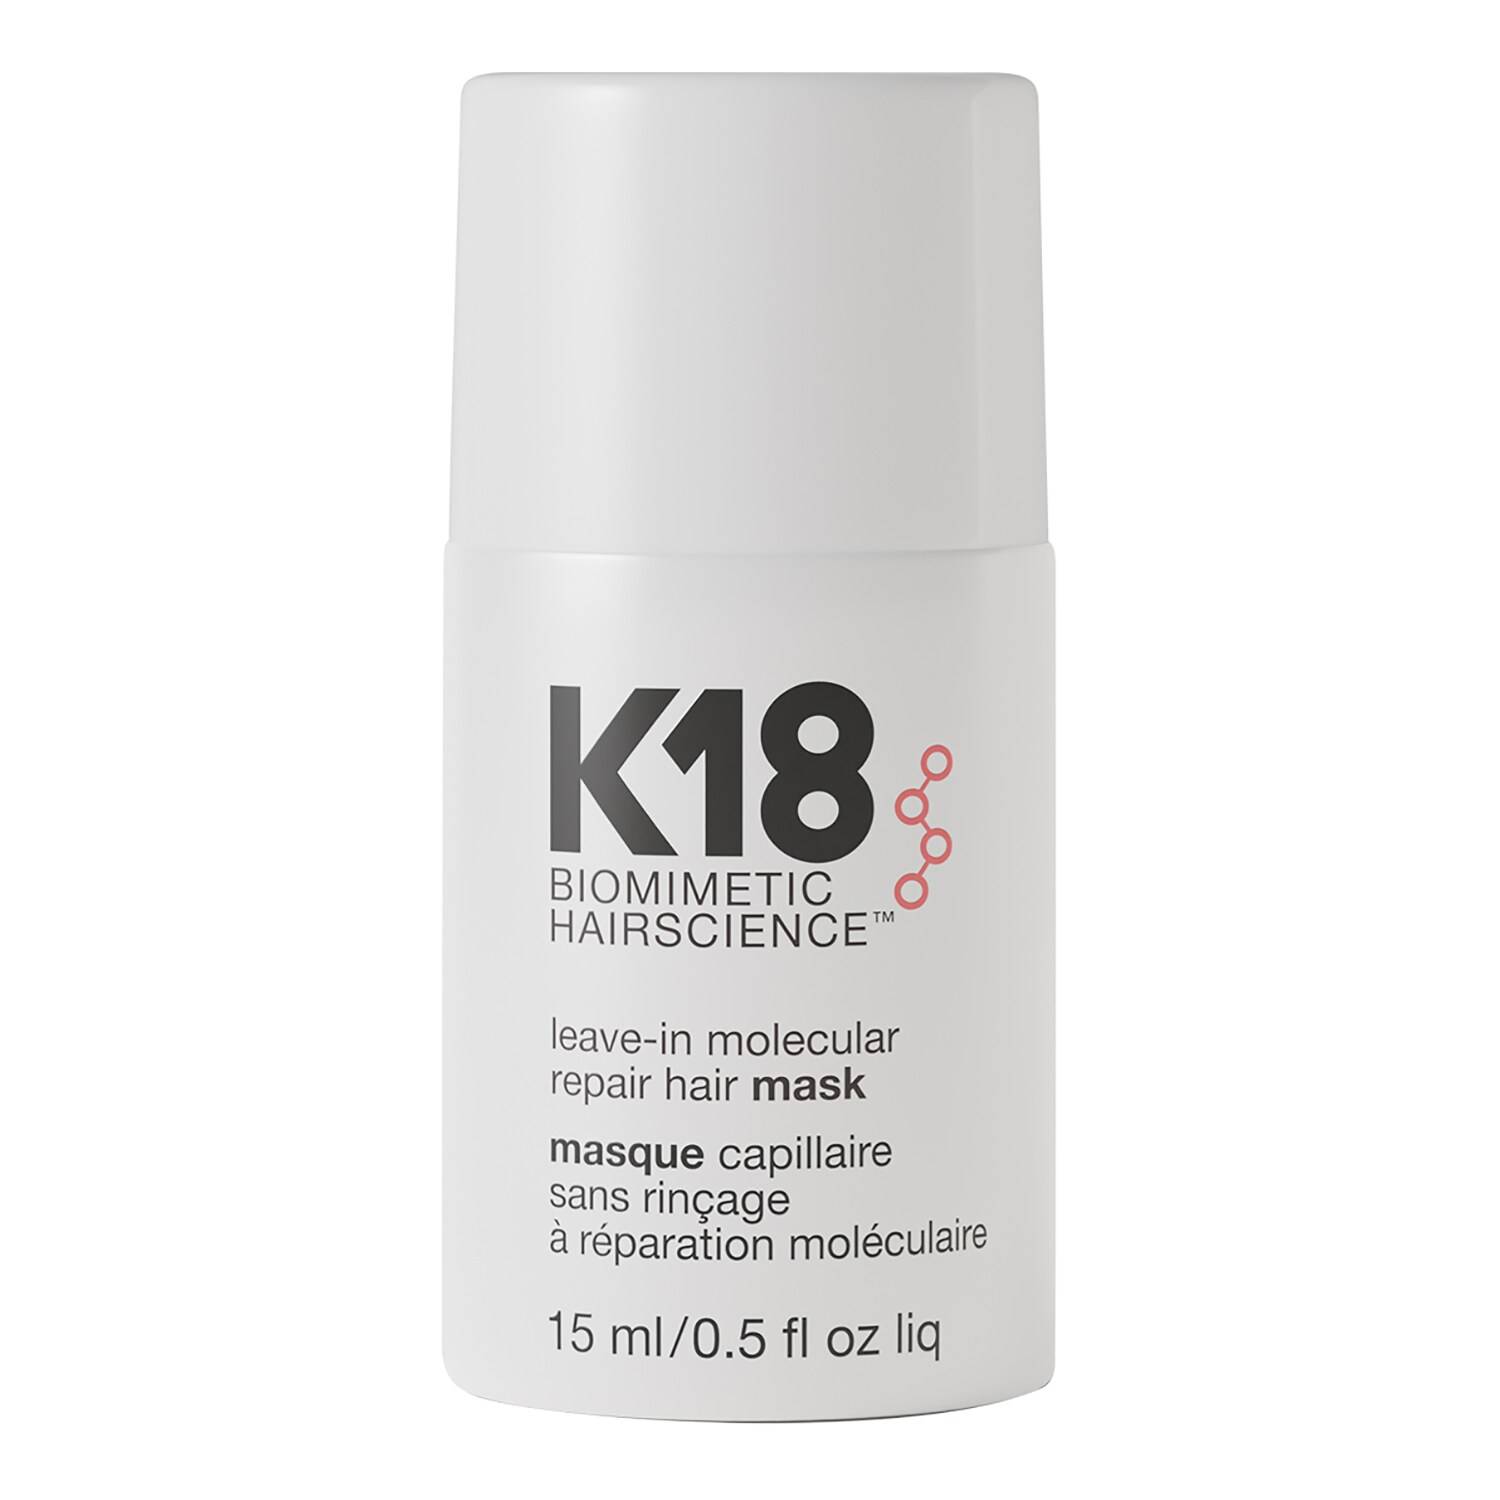 K18 Leave-in Molecular Repair Hair Mask - Treatment for Damaged Hair  15ml